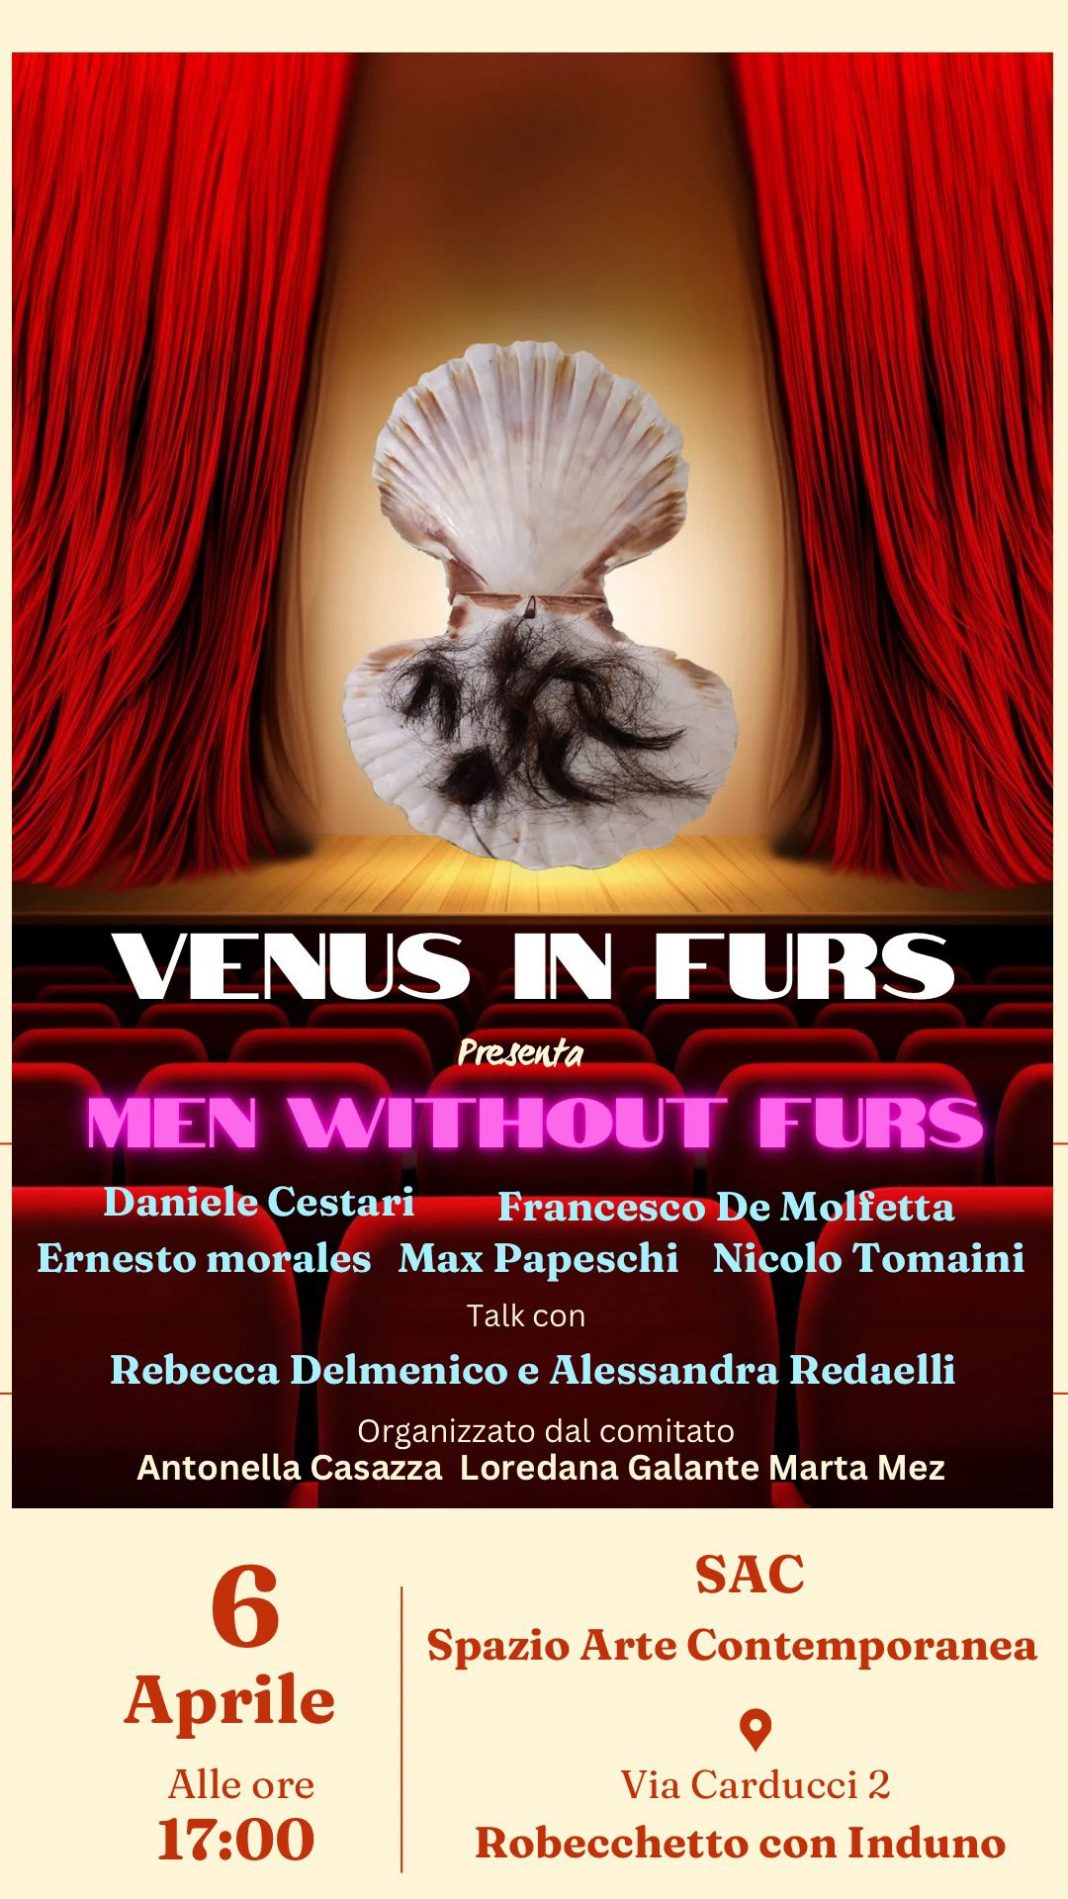 Men Without Furhttps://www.exibart.com/repository/media/formidable/11/img/9d3/dd3ea064-ed95-46ab-b049-f04caaf944b3-1068x1899.jpg